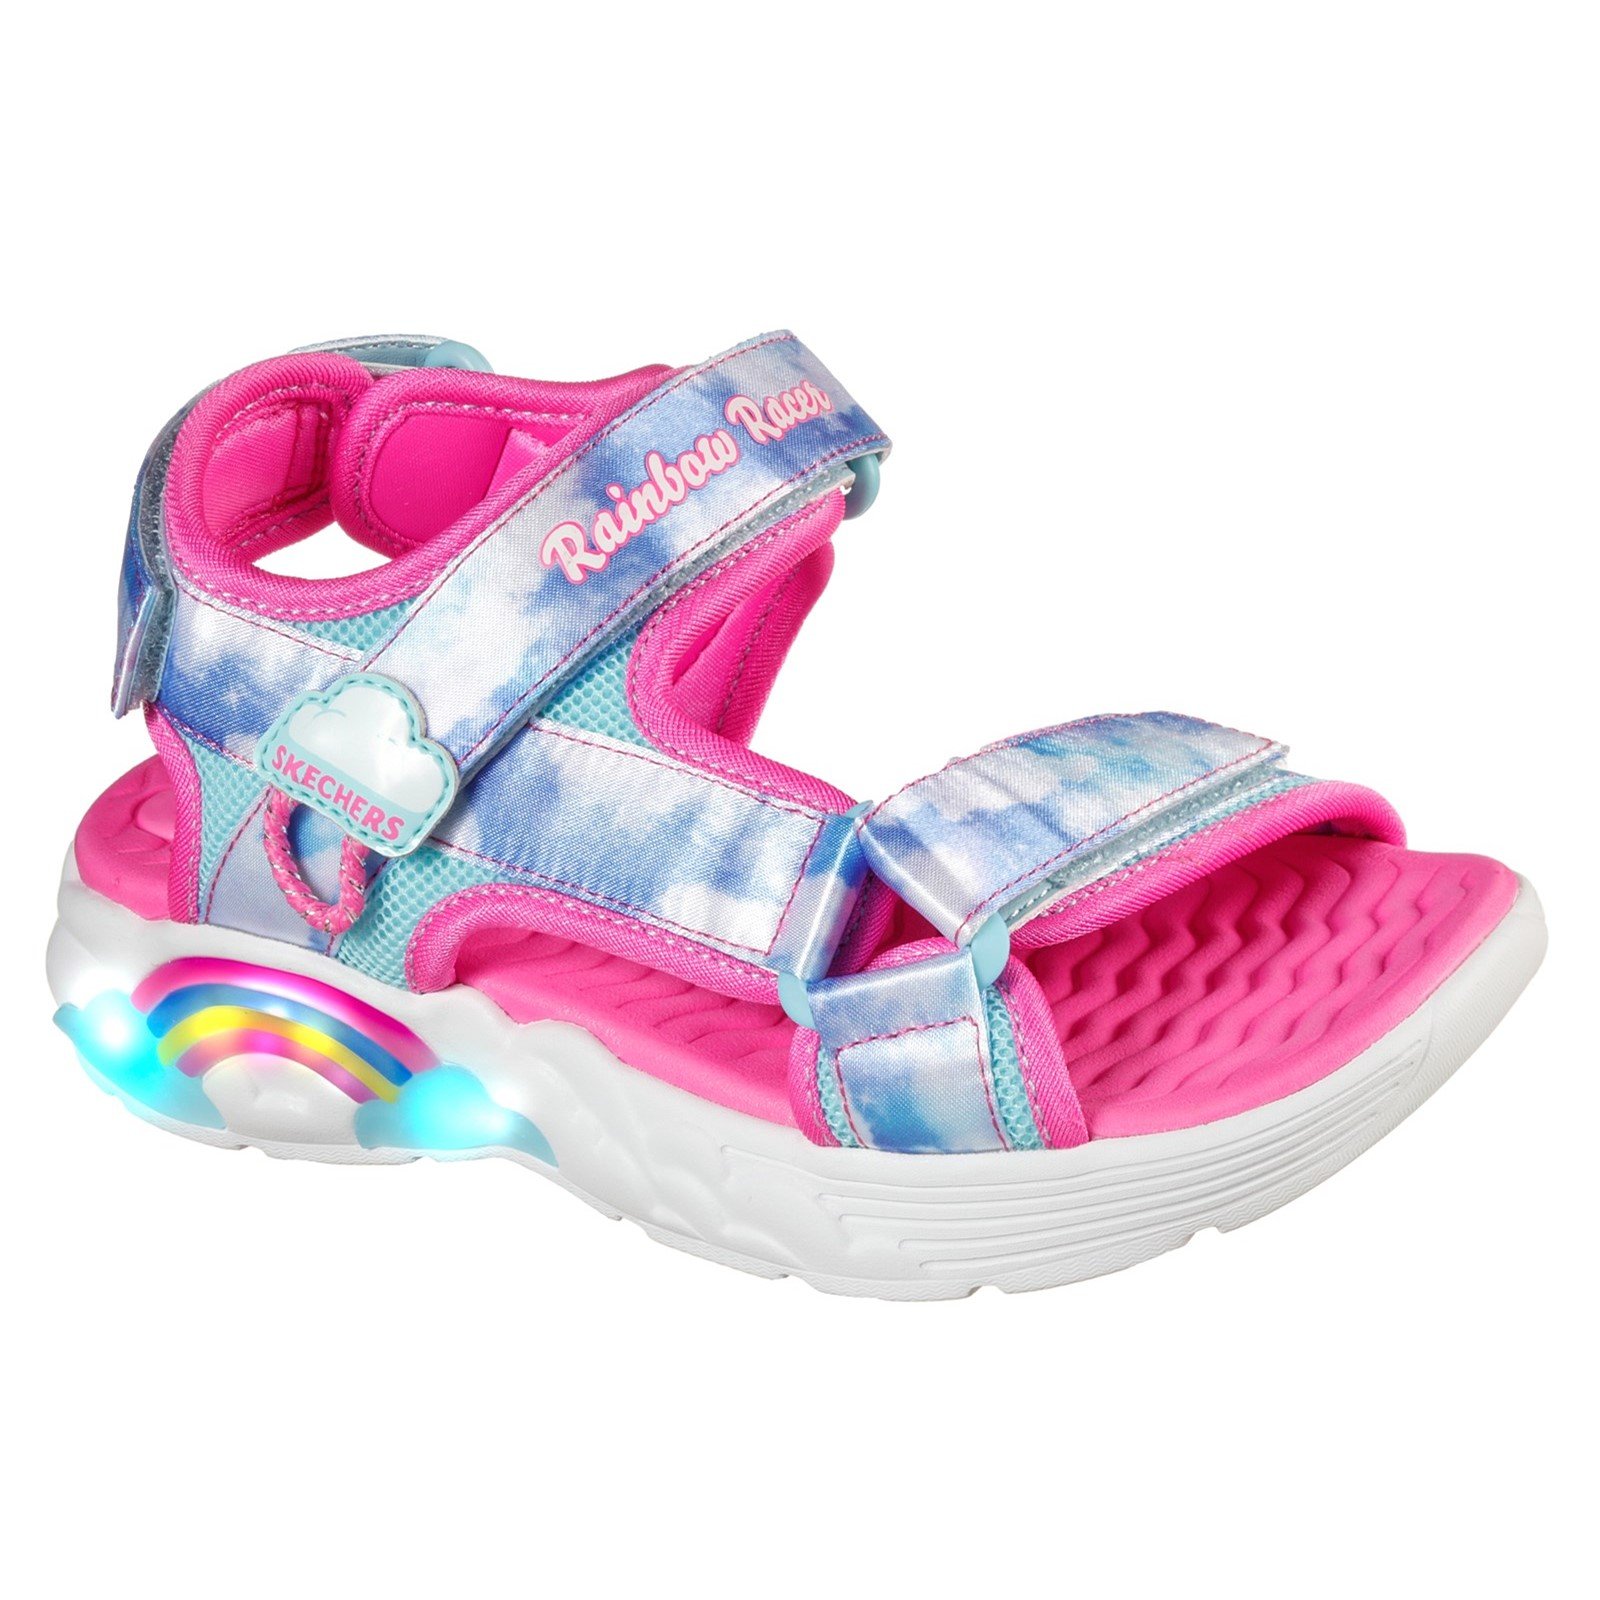 Skechers Unisex Rainbow Racer Summer Sky Beach Sandals Multicolor 32096 - Pink/Blue Textile 1.5